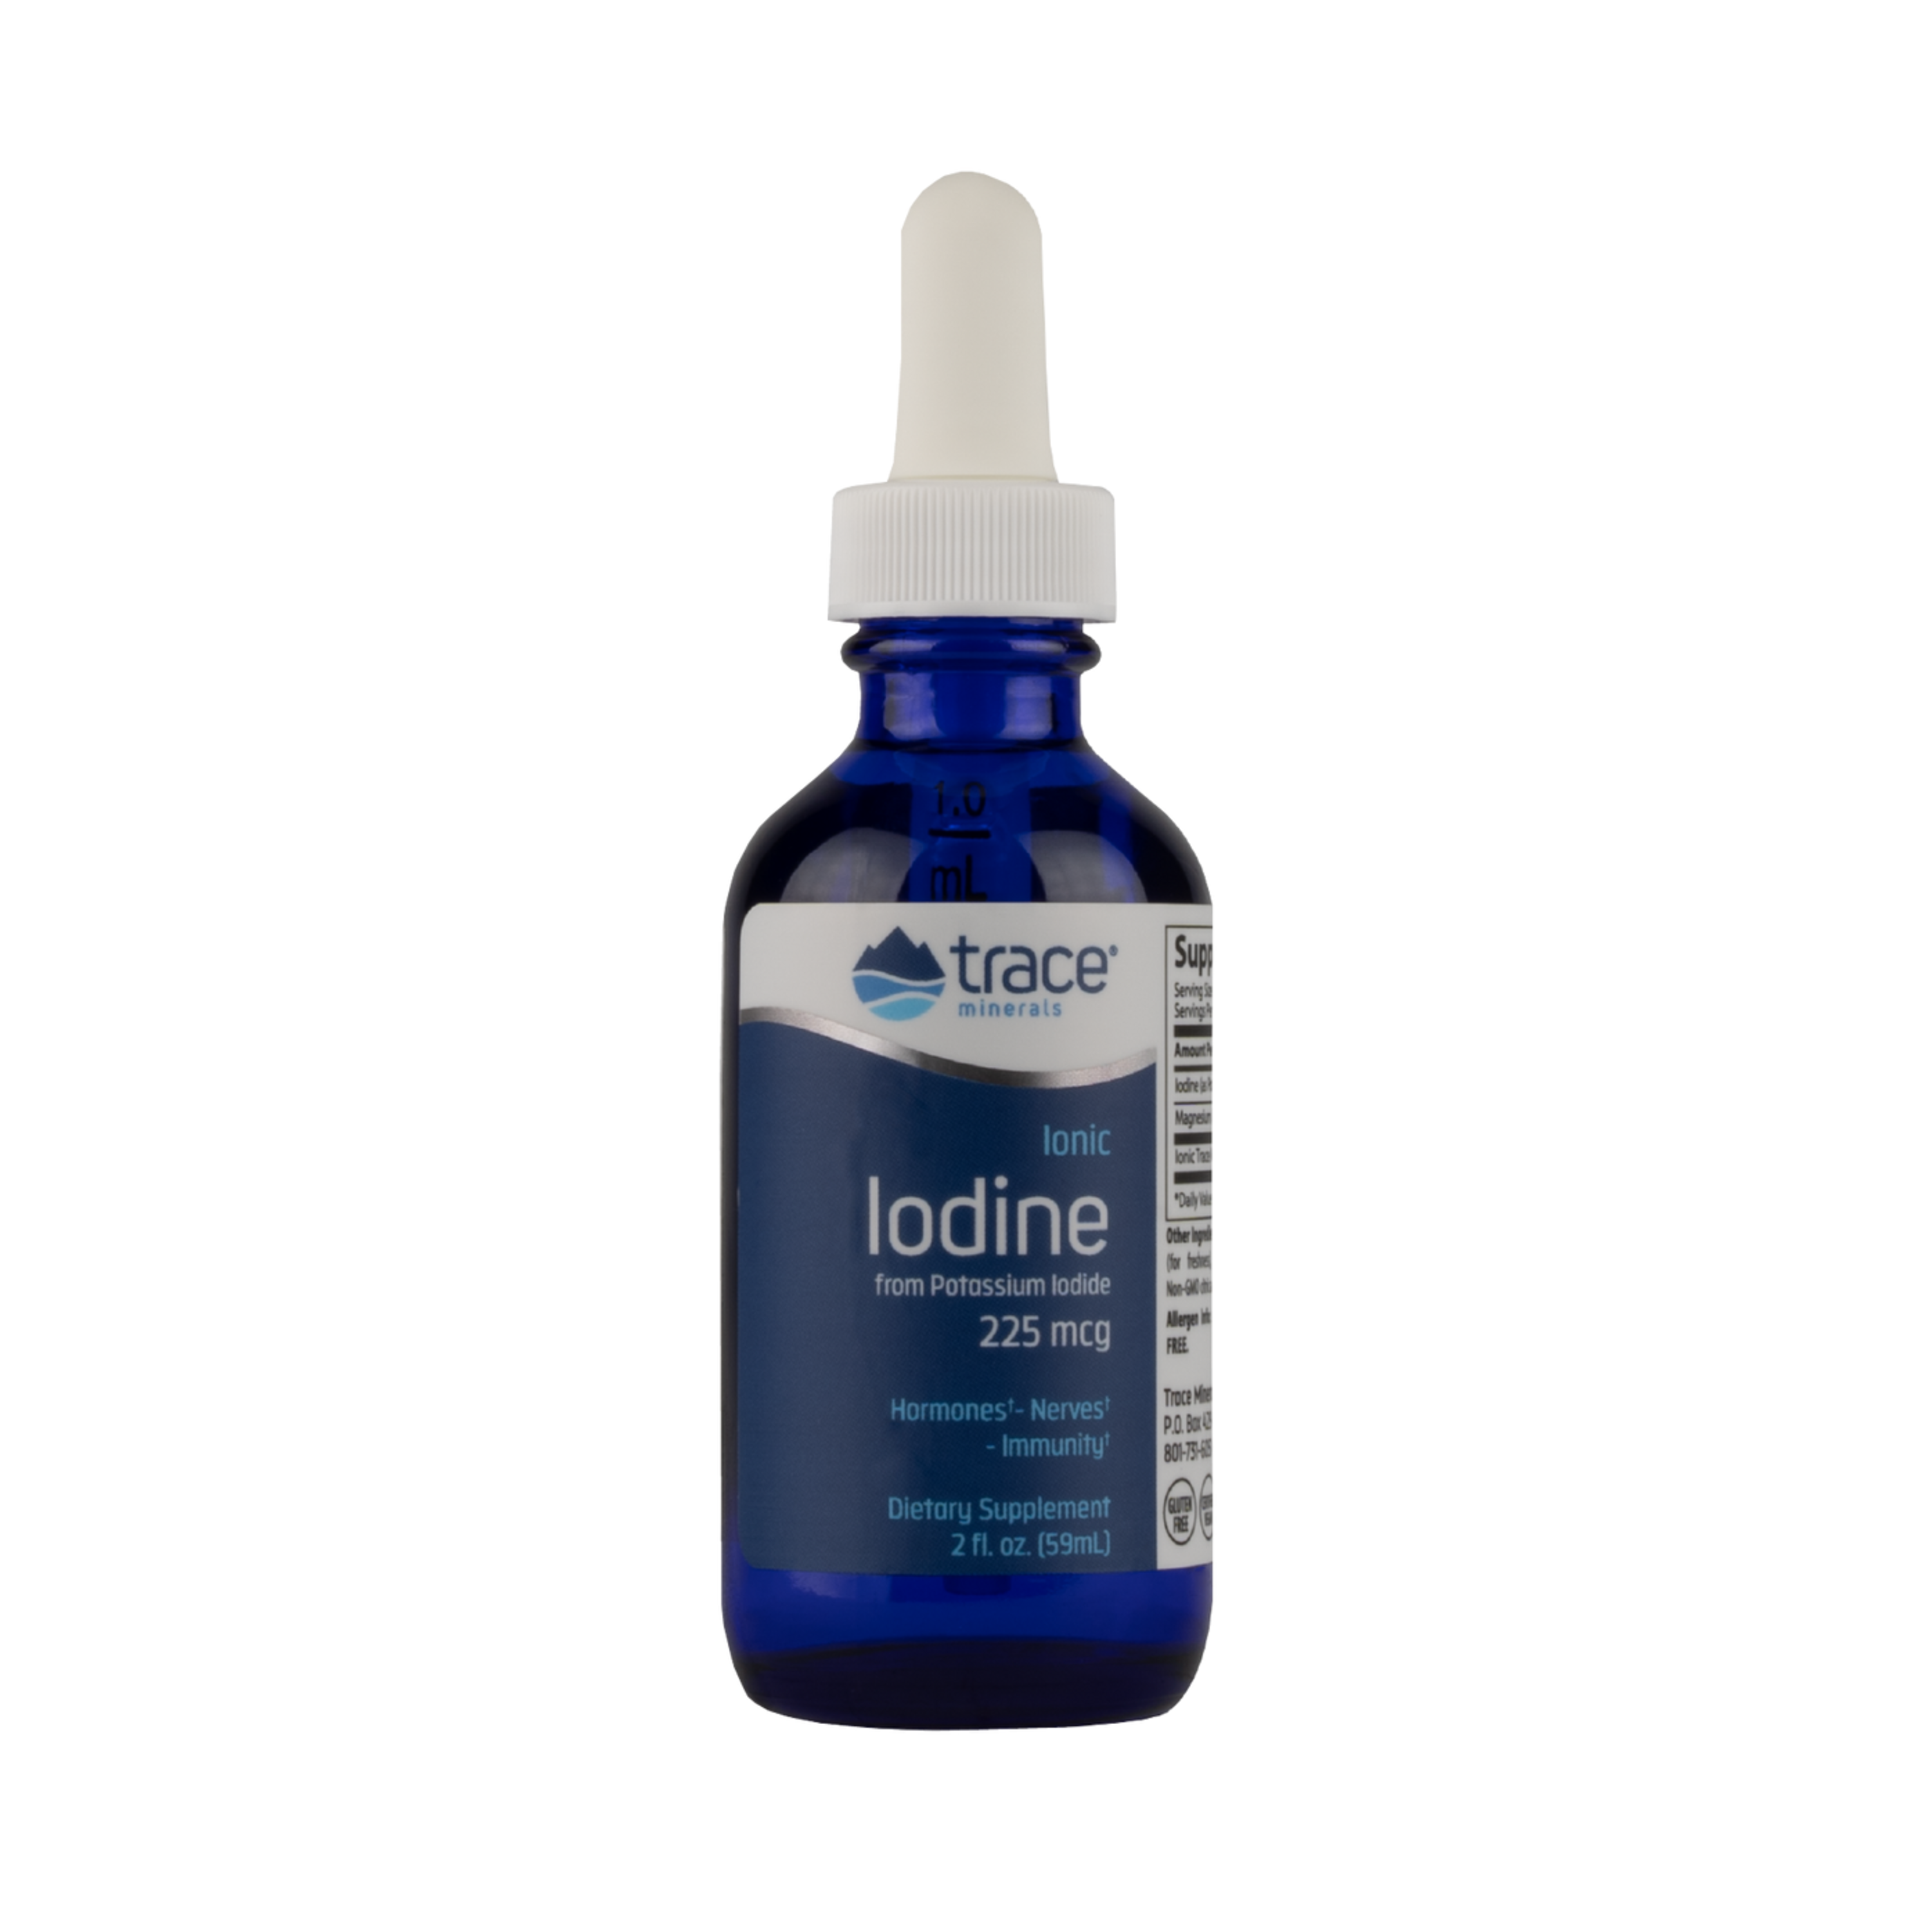 Ionic Iodine 225mcg 59ml